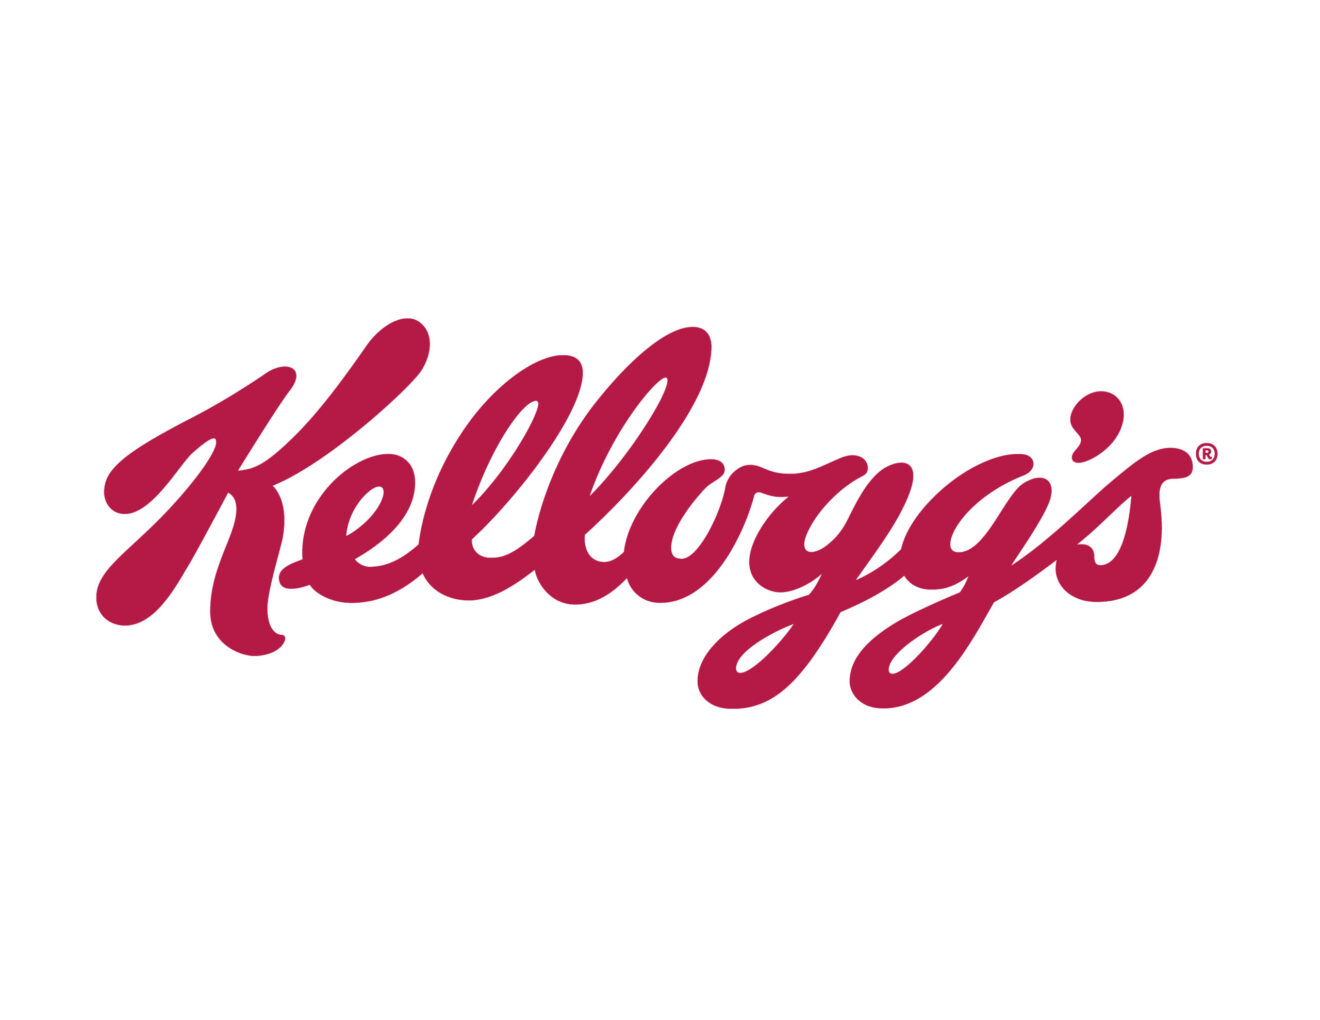 Kellogg's; Building a growth culture